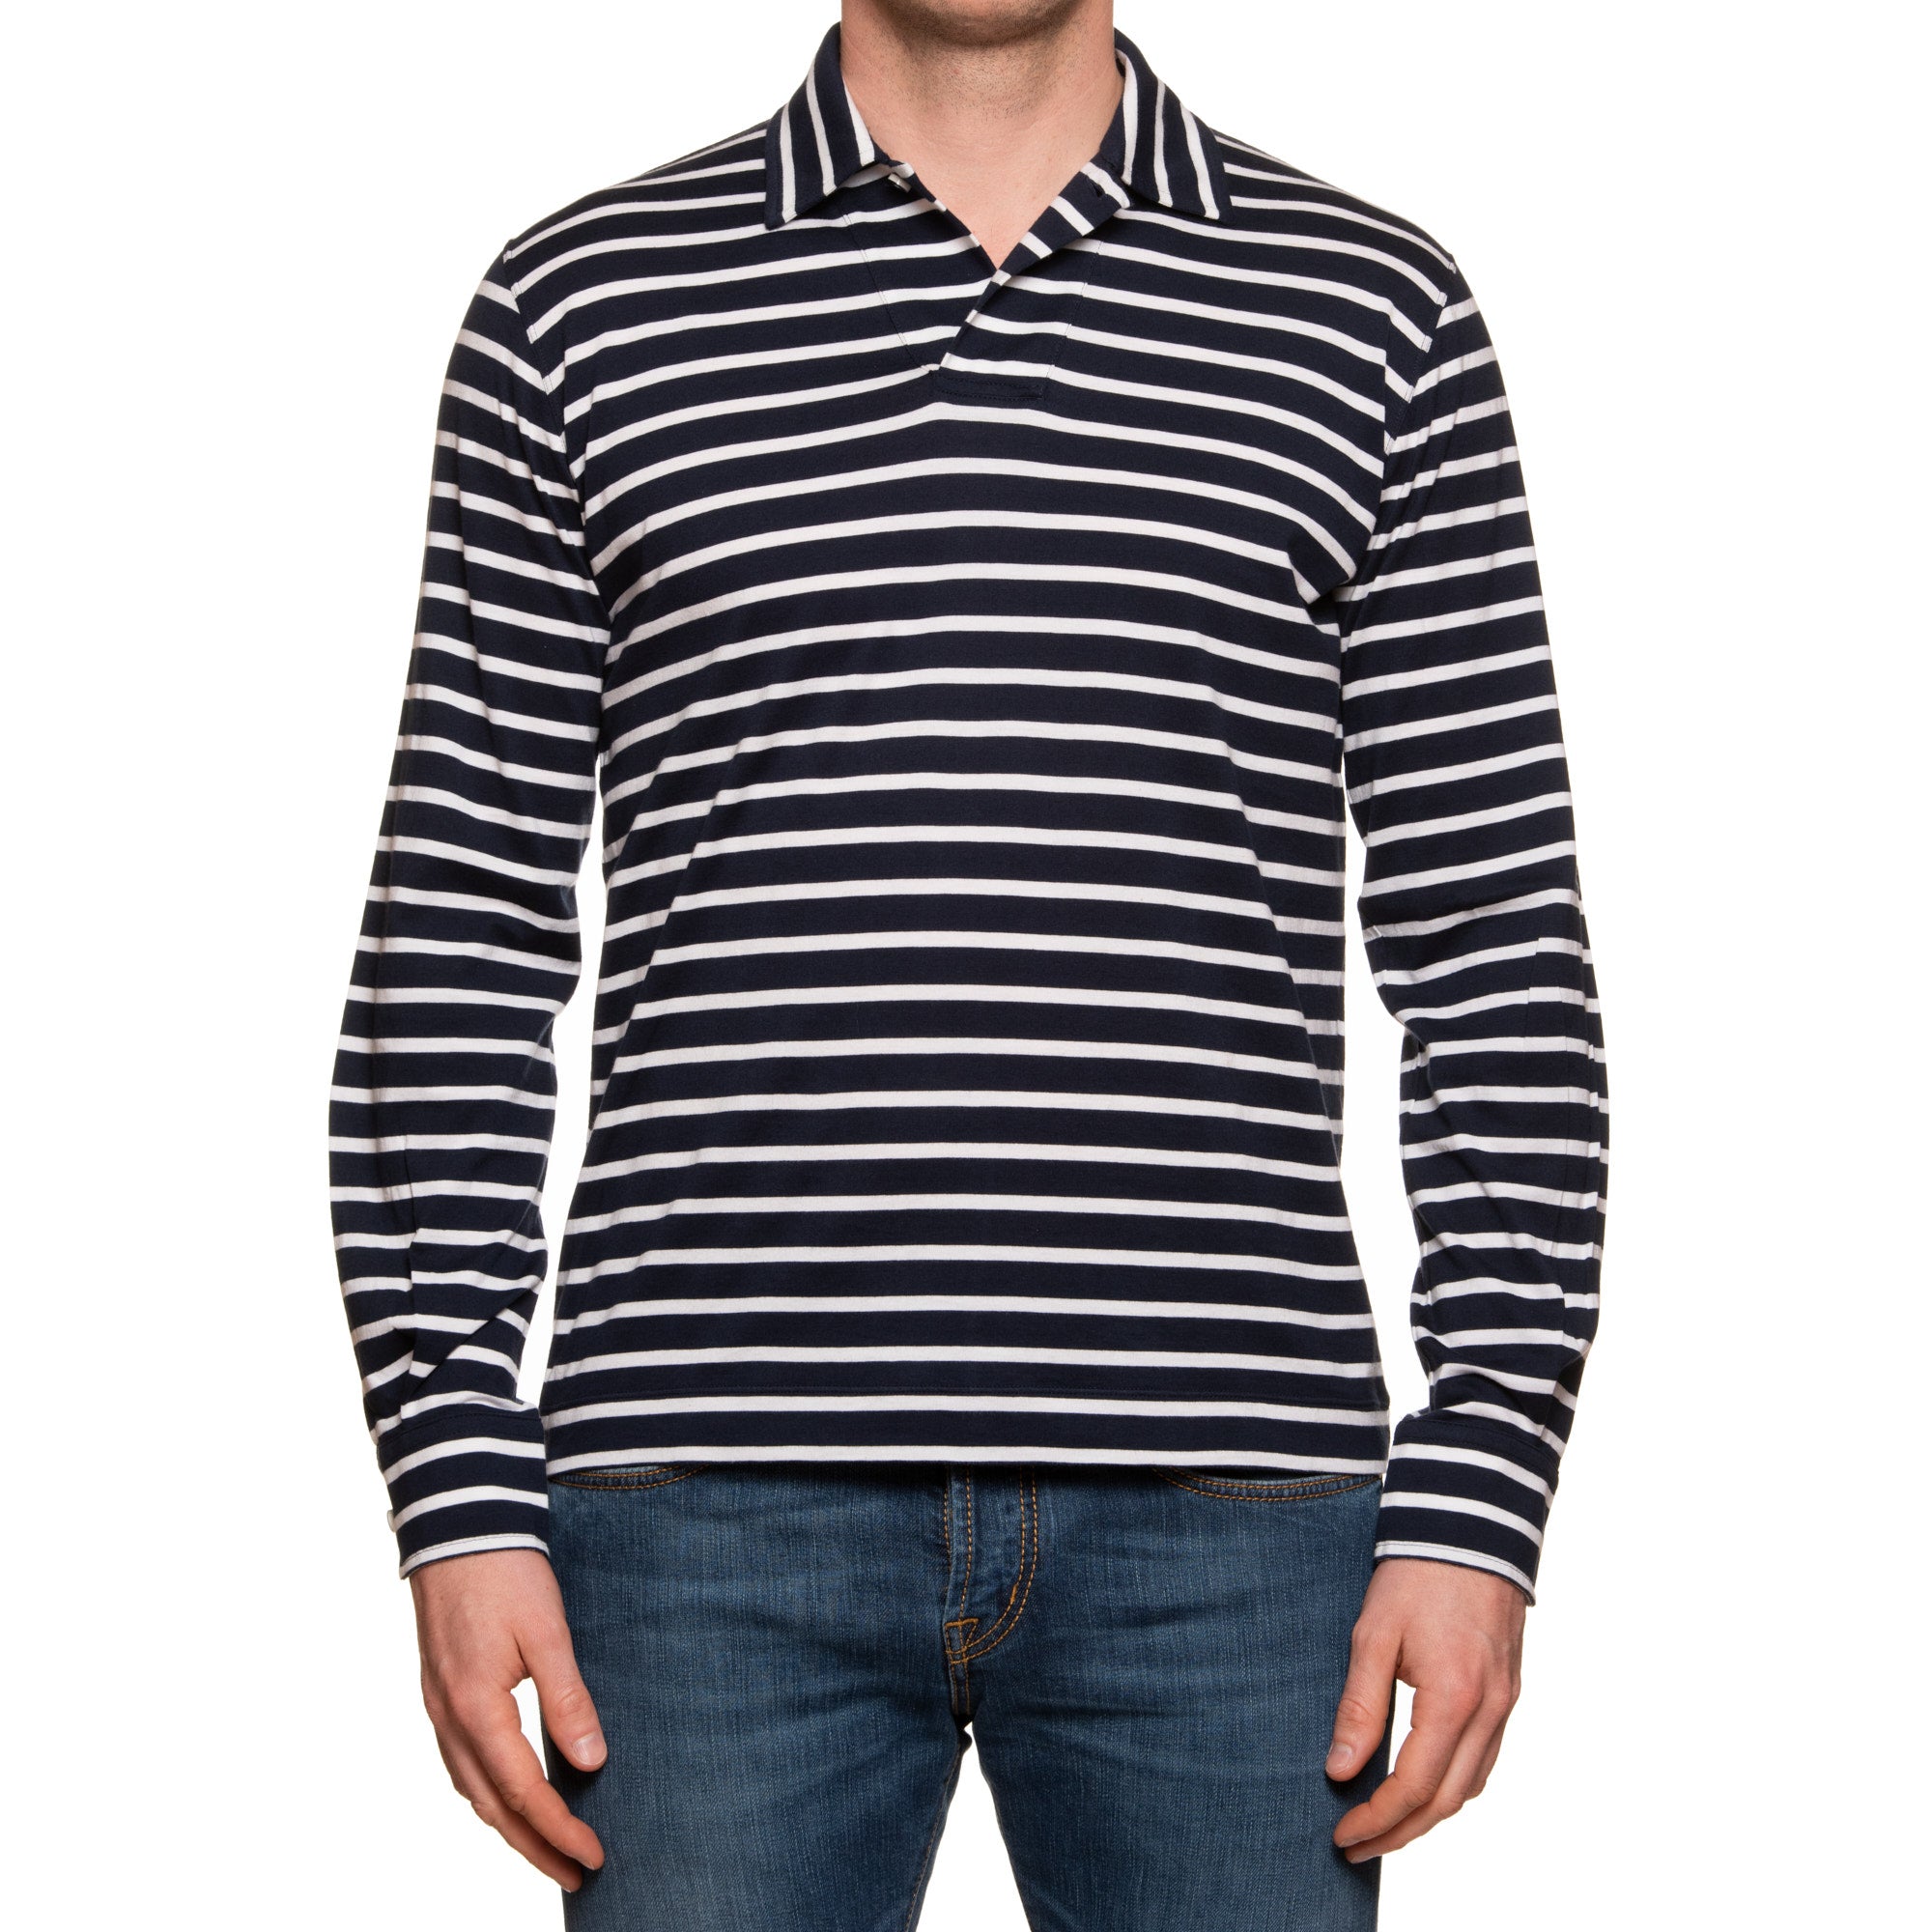 FEDELI "Partenope" Navy Blue Striped Sea Island Cotton Jersey Polo Shirt 50 NEW US M FEDELI